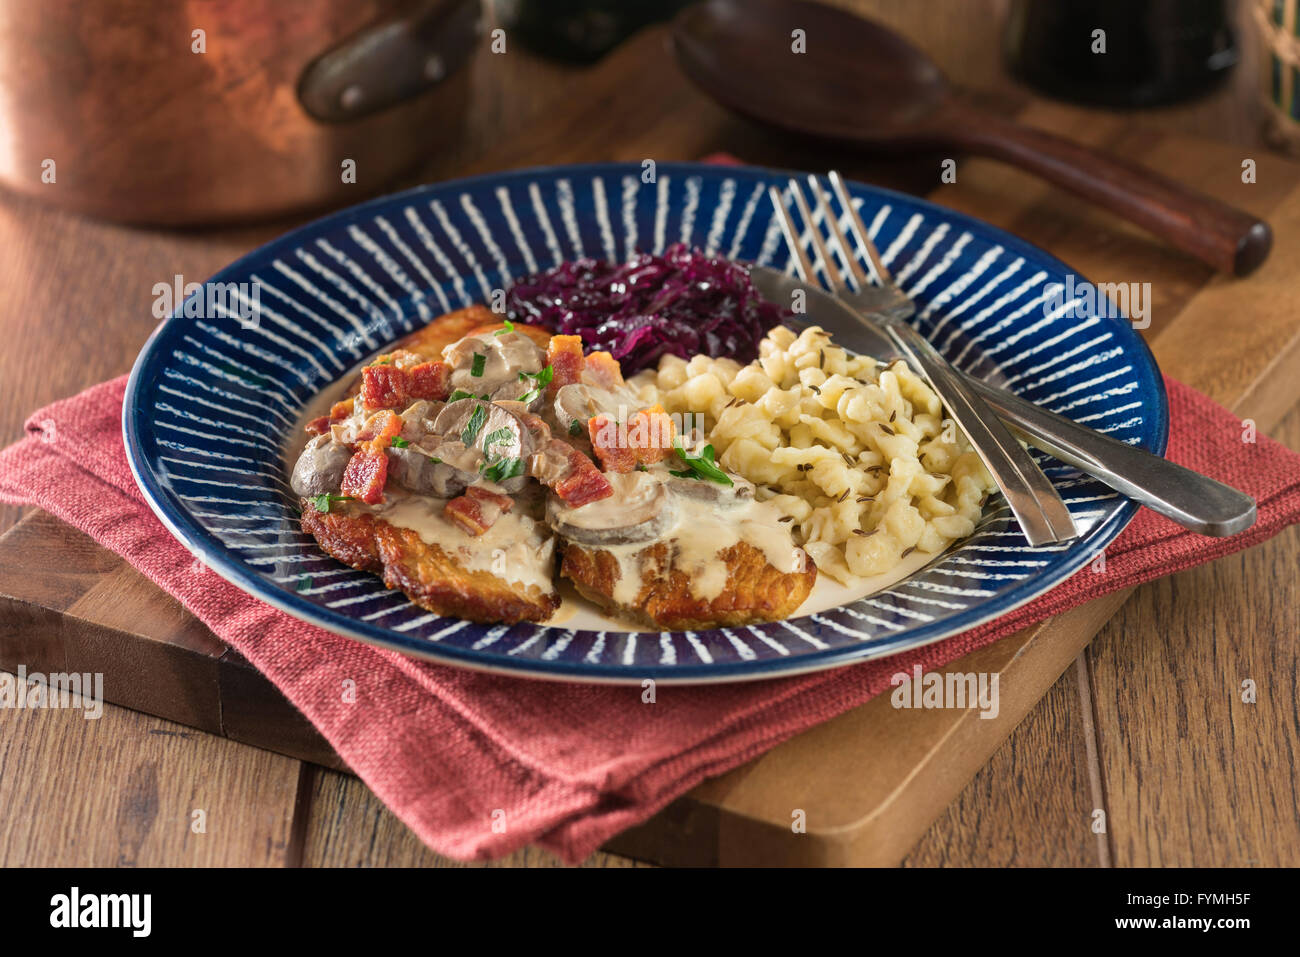 Jägerschnitzel with spätzle. Pork escalope with mushroom sauce and pasta. Germany Food Stock Photo